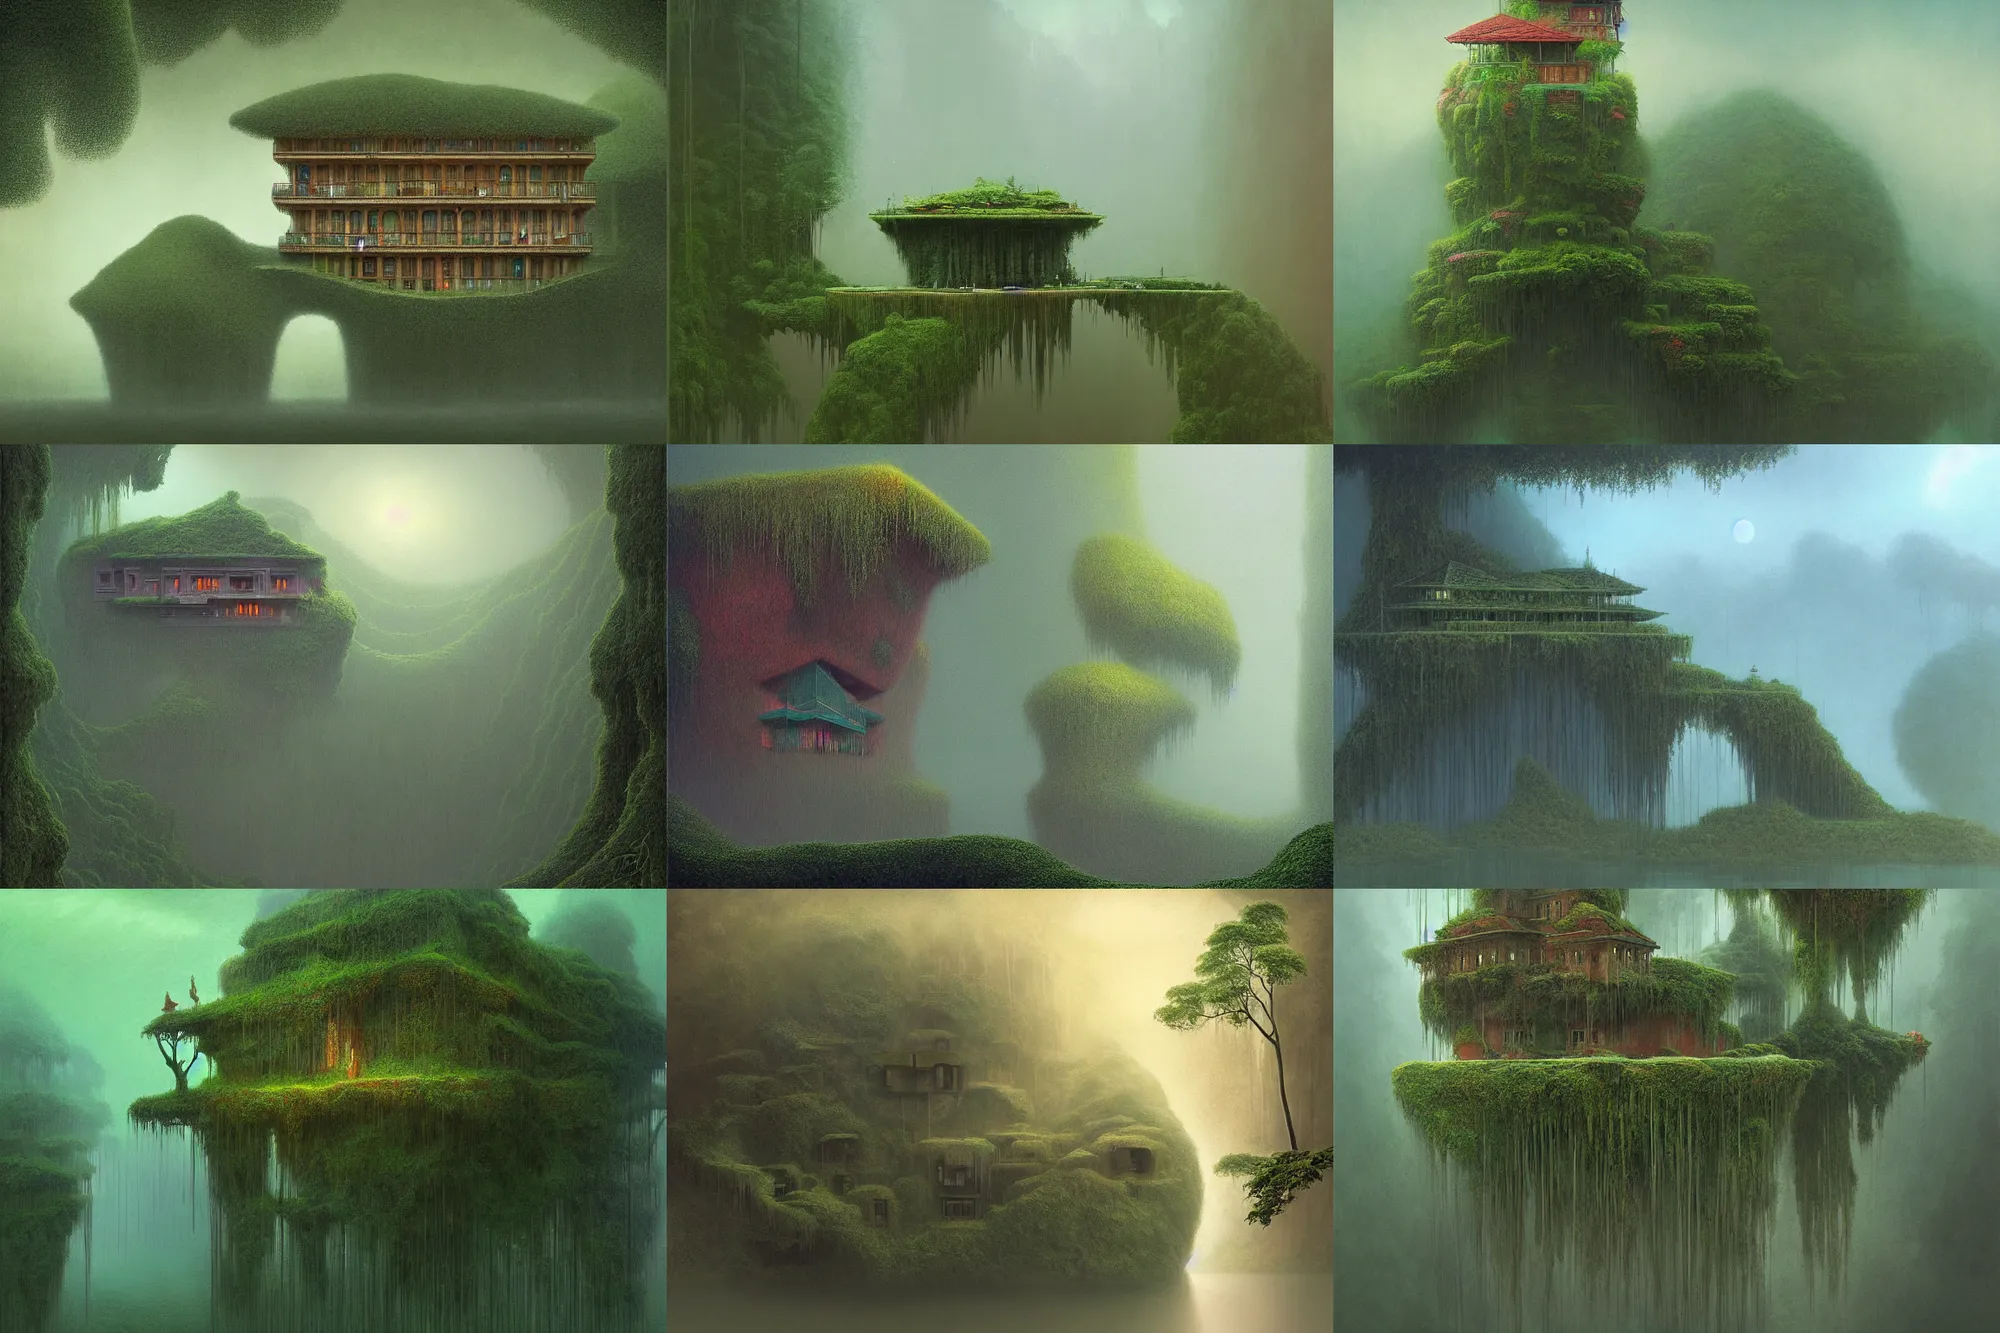 Prompt: floating mansion in a rainforest in the style of zdzislaw beksinski, digital art